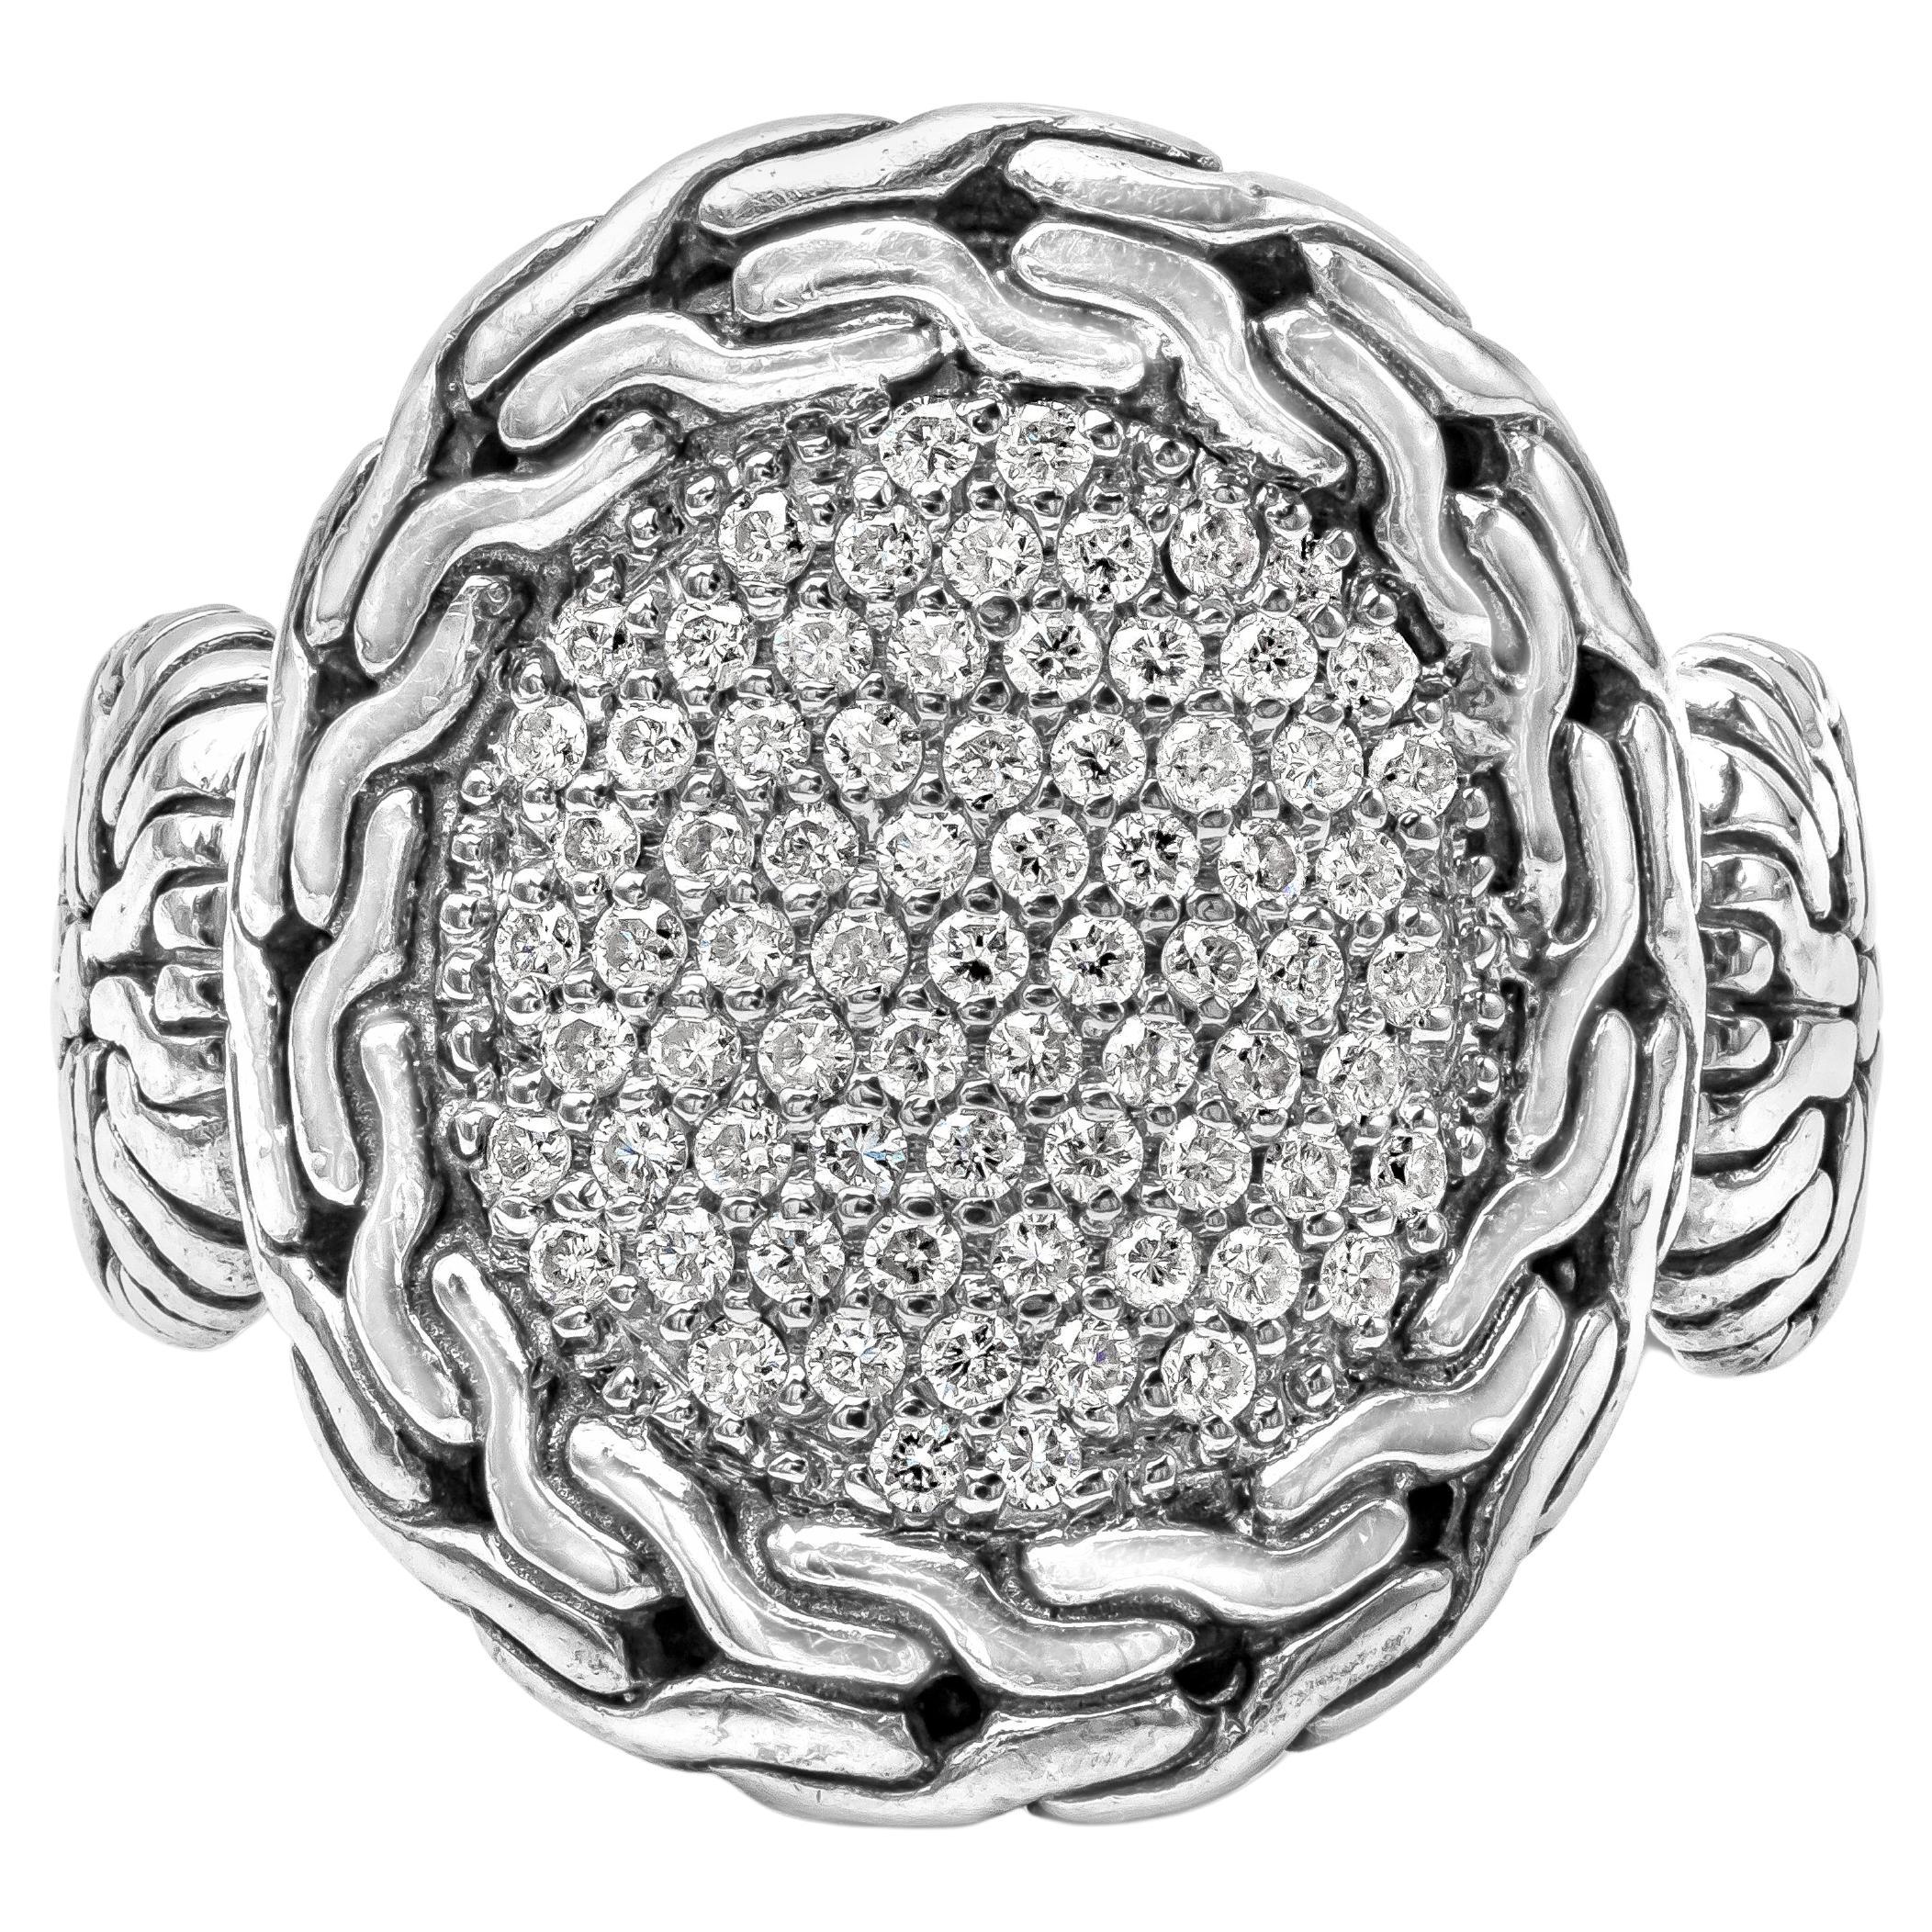 David Yurman 0.37 Carats Total Brilliant Round Cut Diamond Cocktail Fashion Ring